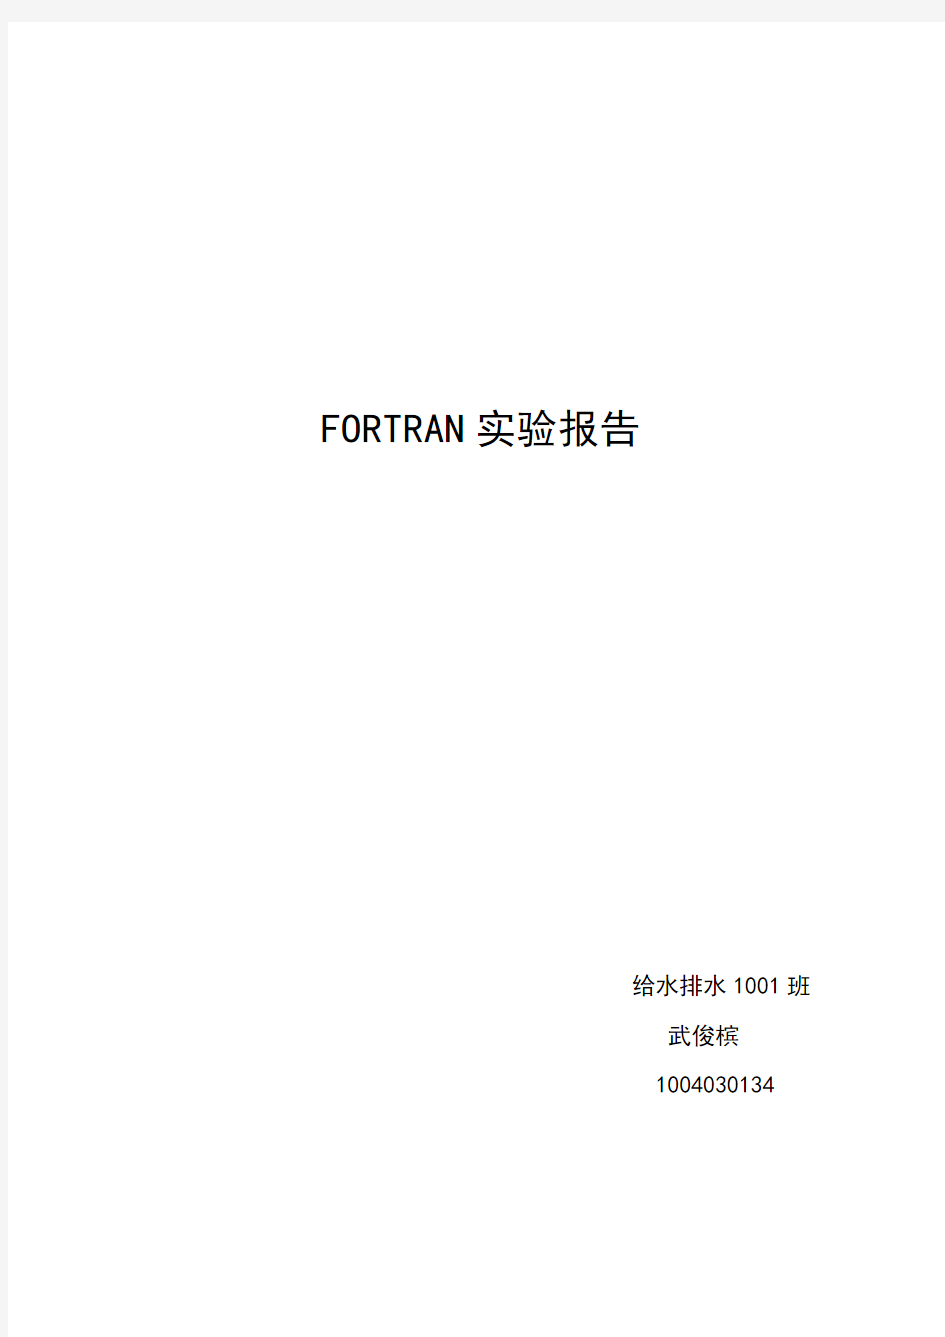 FORTRAN模拟计算器程序